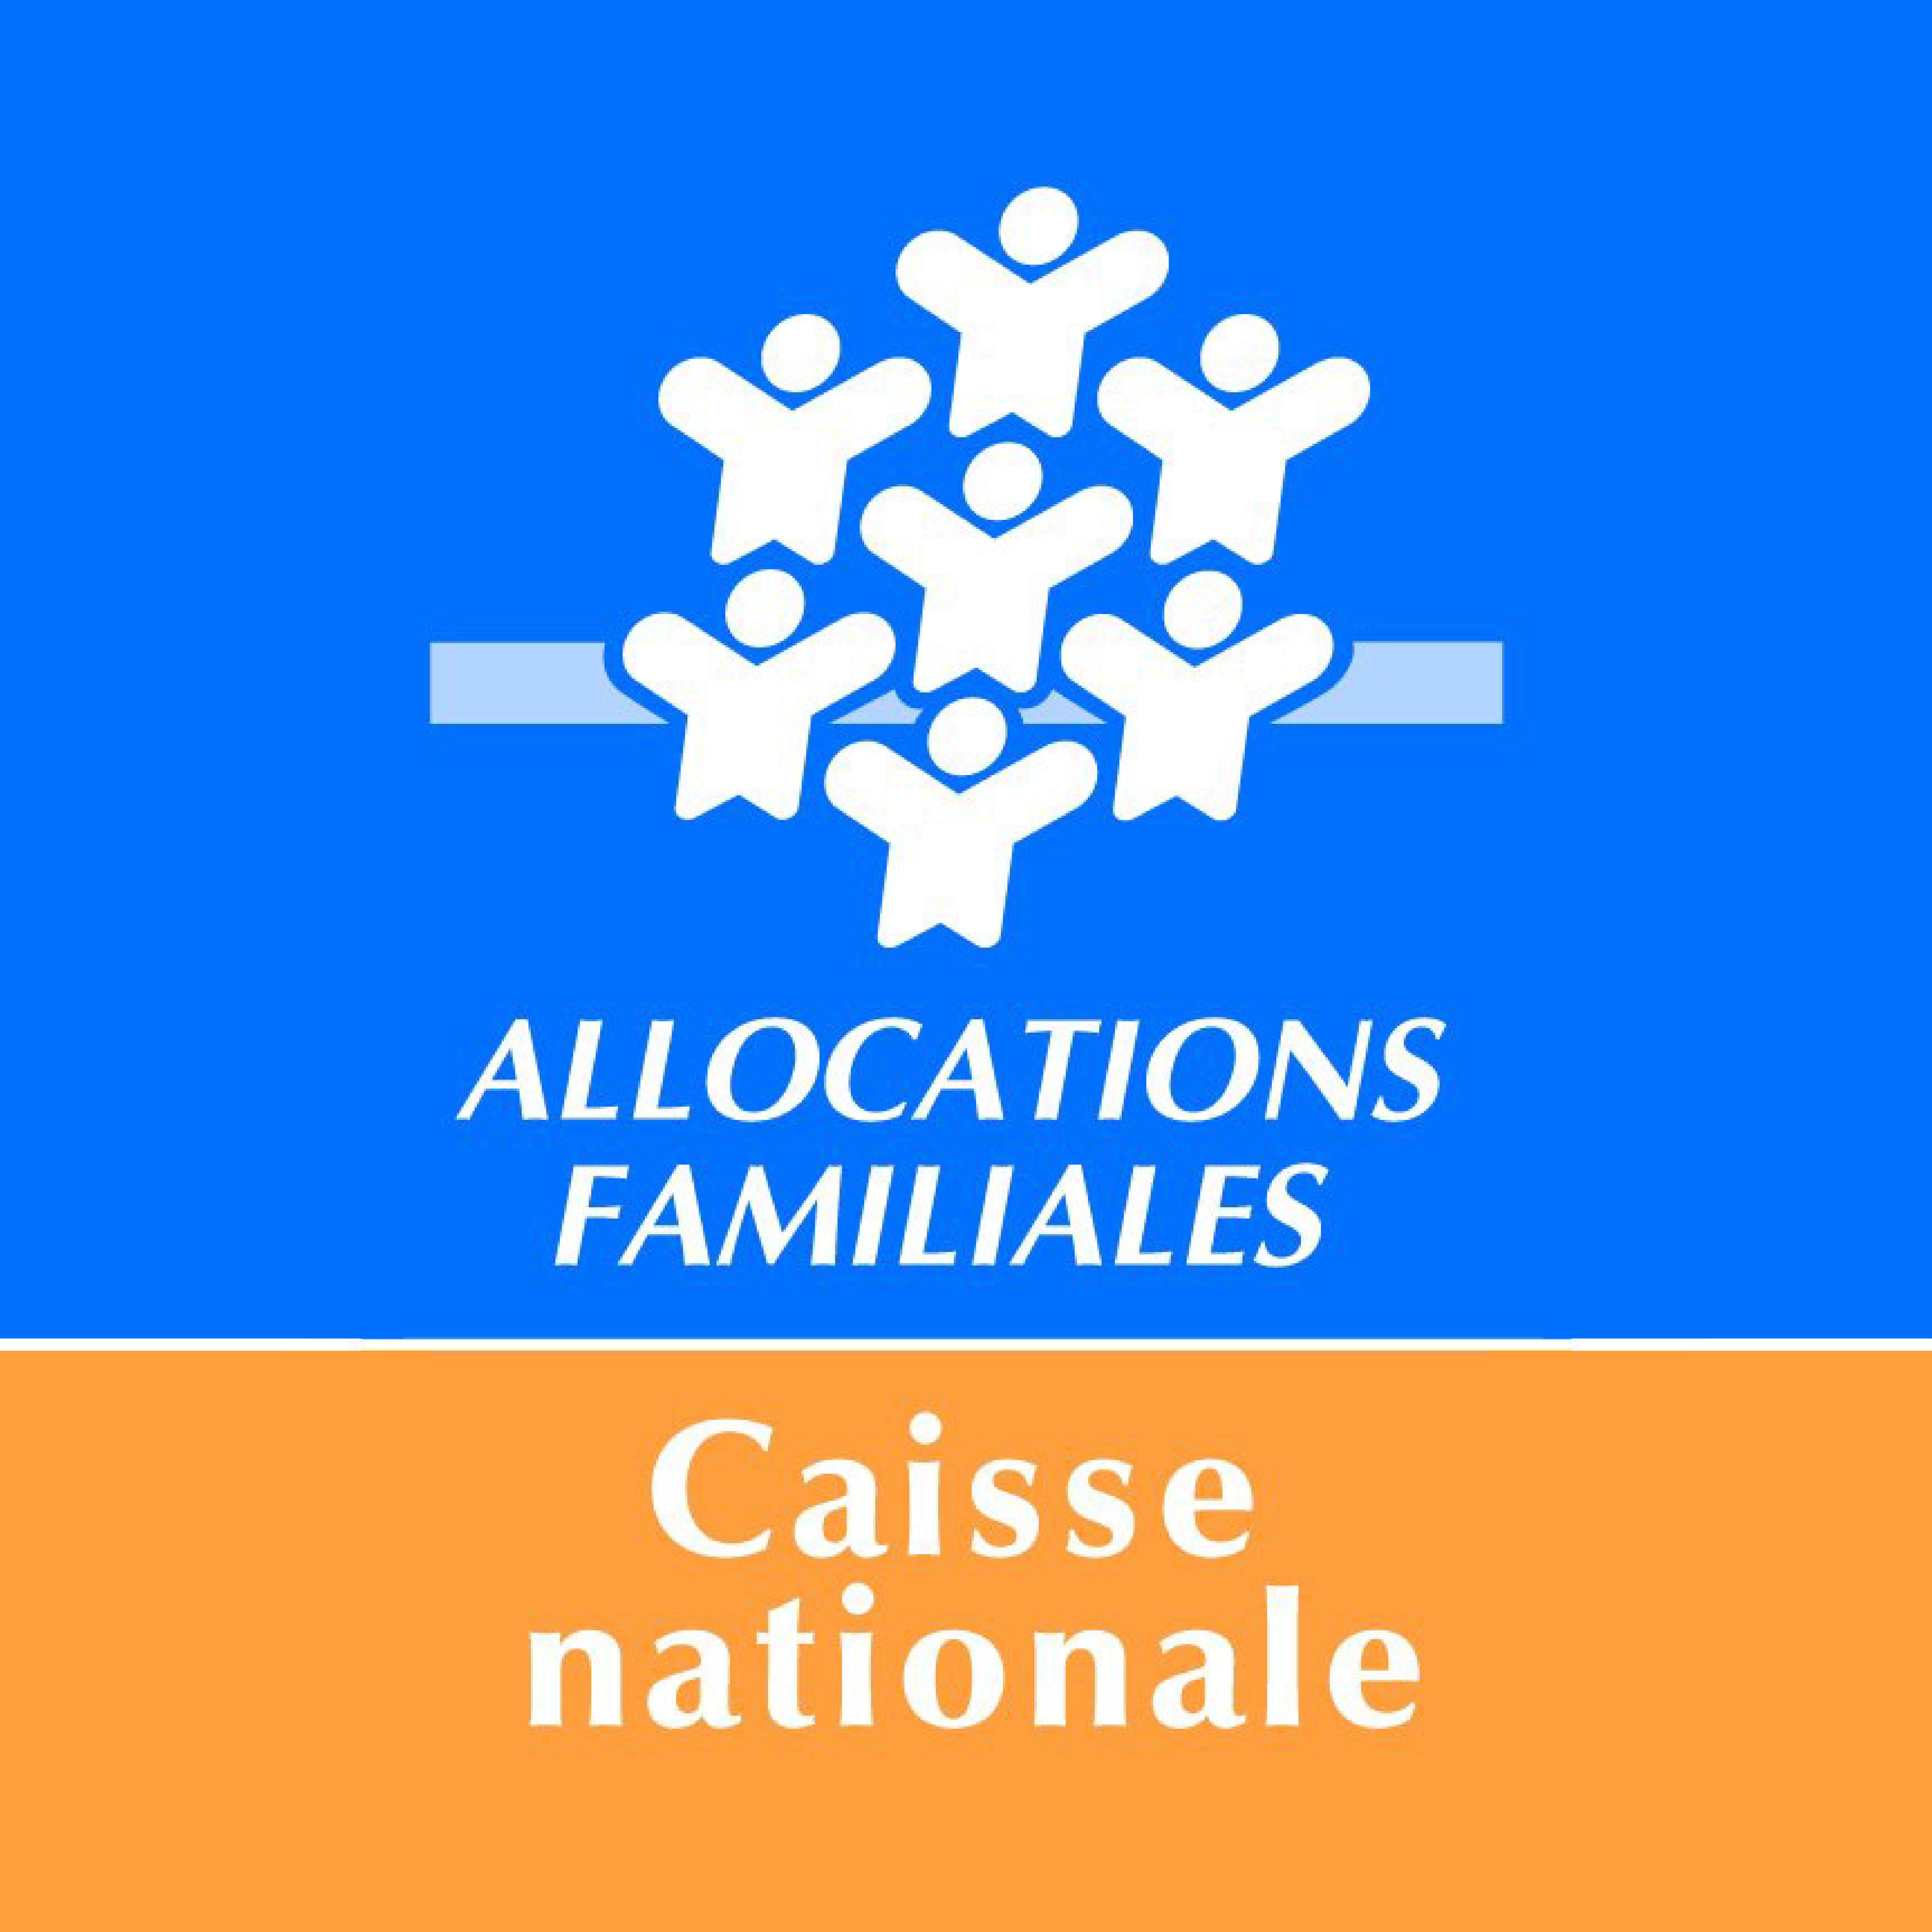 Caisse nationale allocations familiales